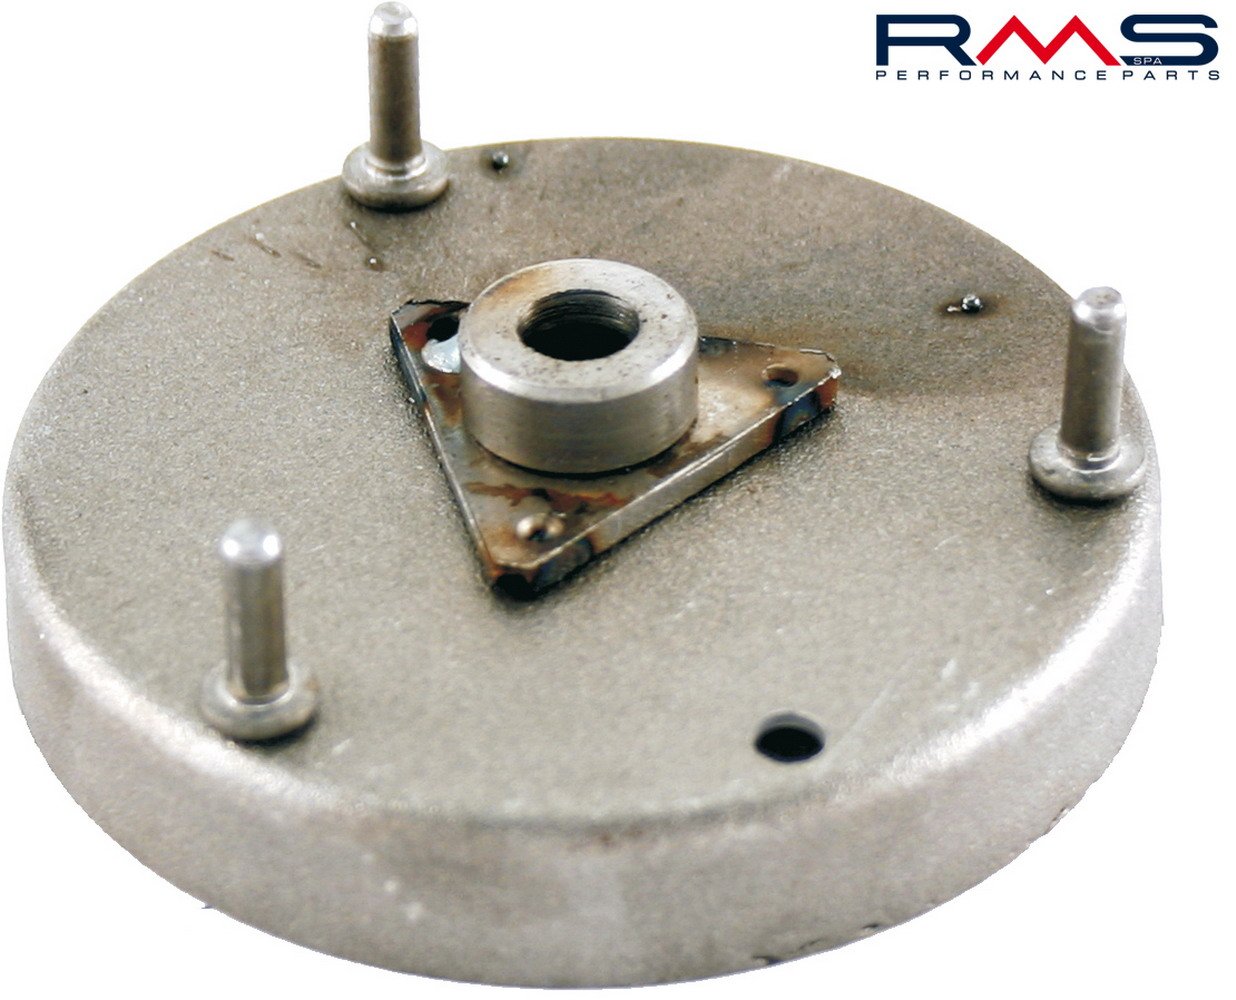 Obrázek produktu Internal drum clutch RMS 100260120